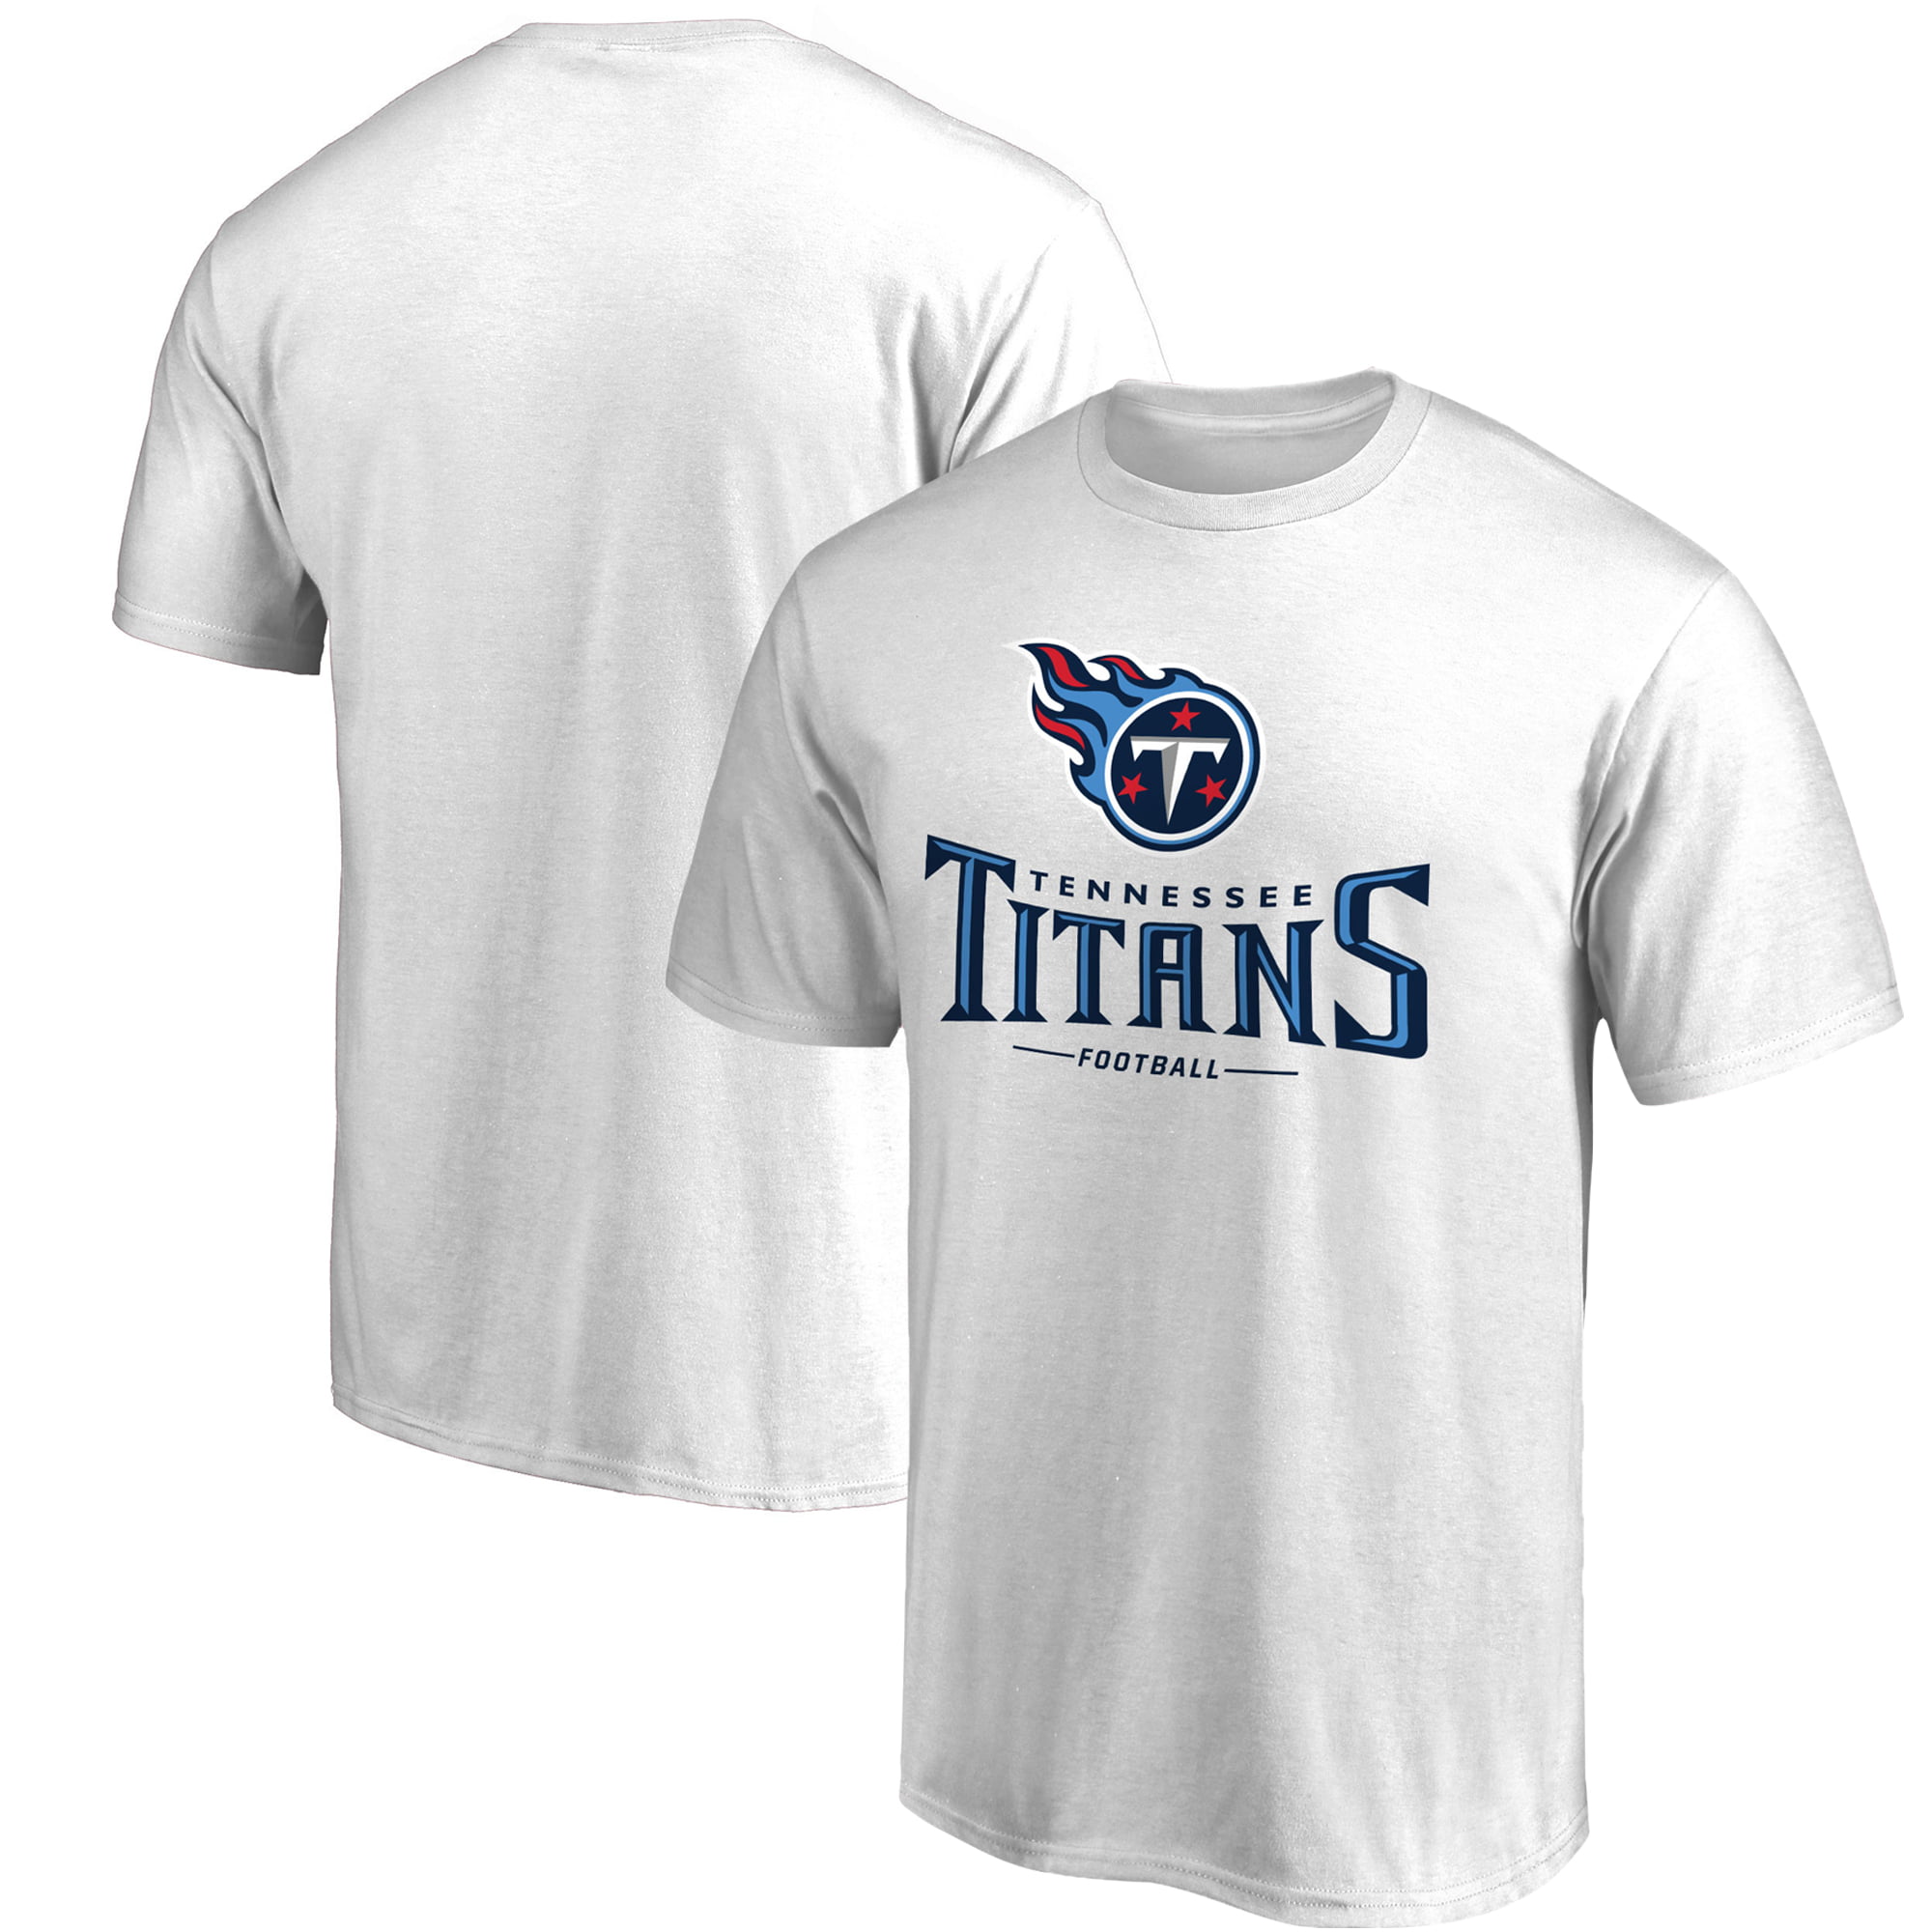 Tennessee Titans NFL Pro Line Team 